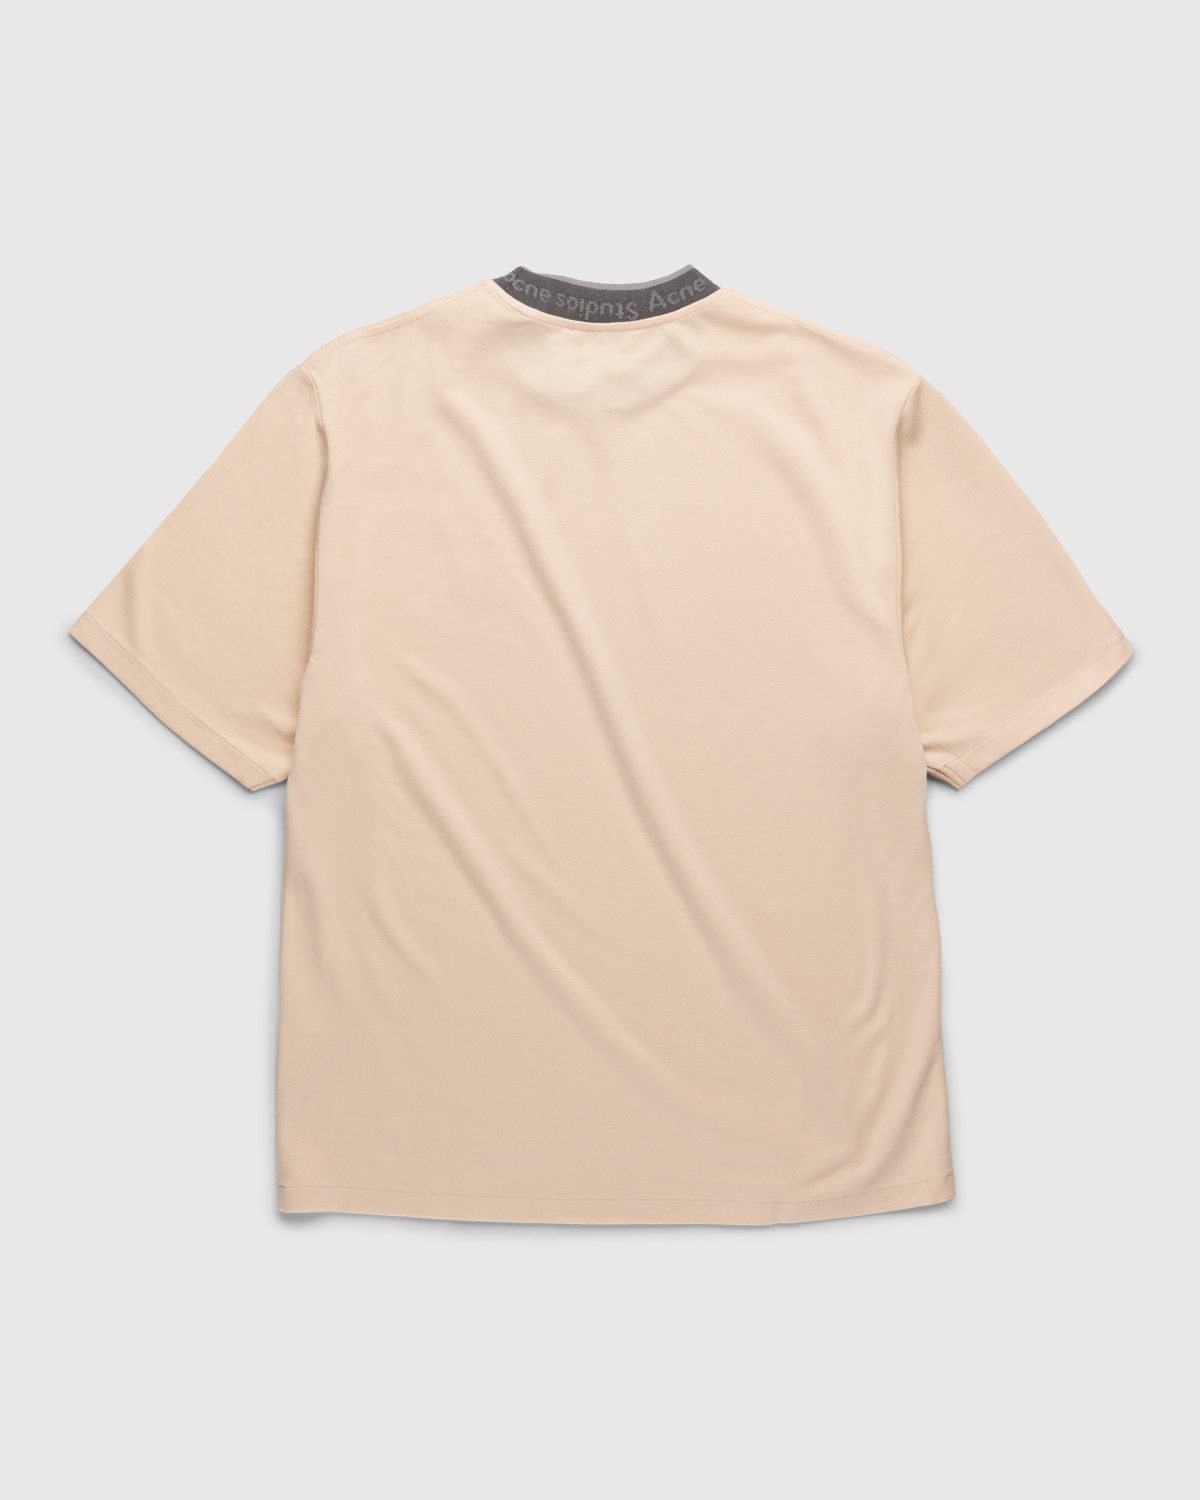 Acne Studios - Logo Collar T-Shirt Cream Beige - Clothing - Beige - Image 2